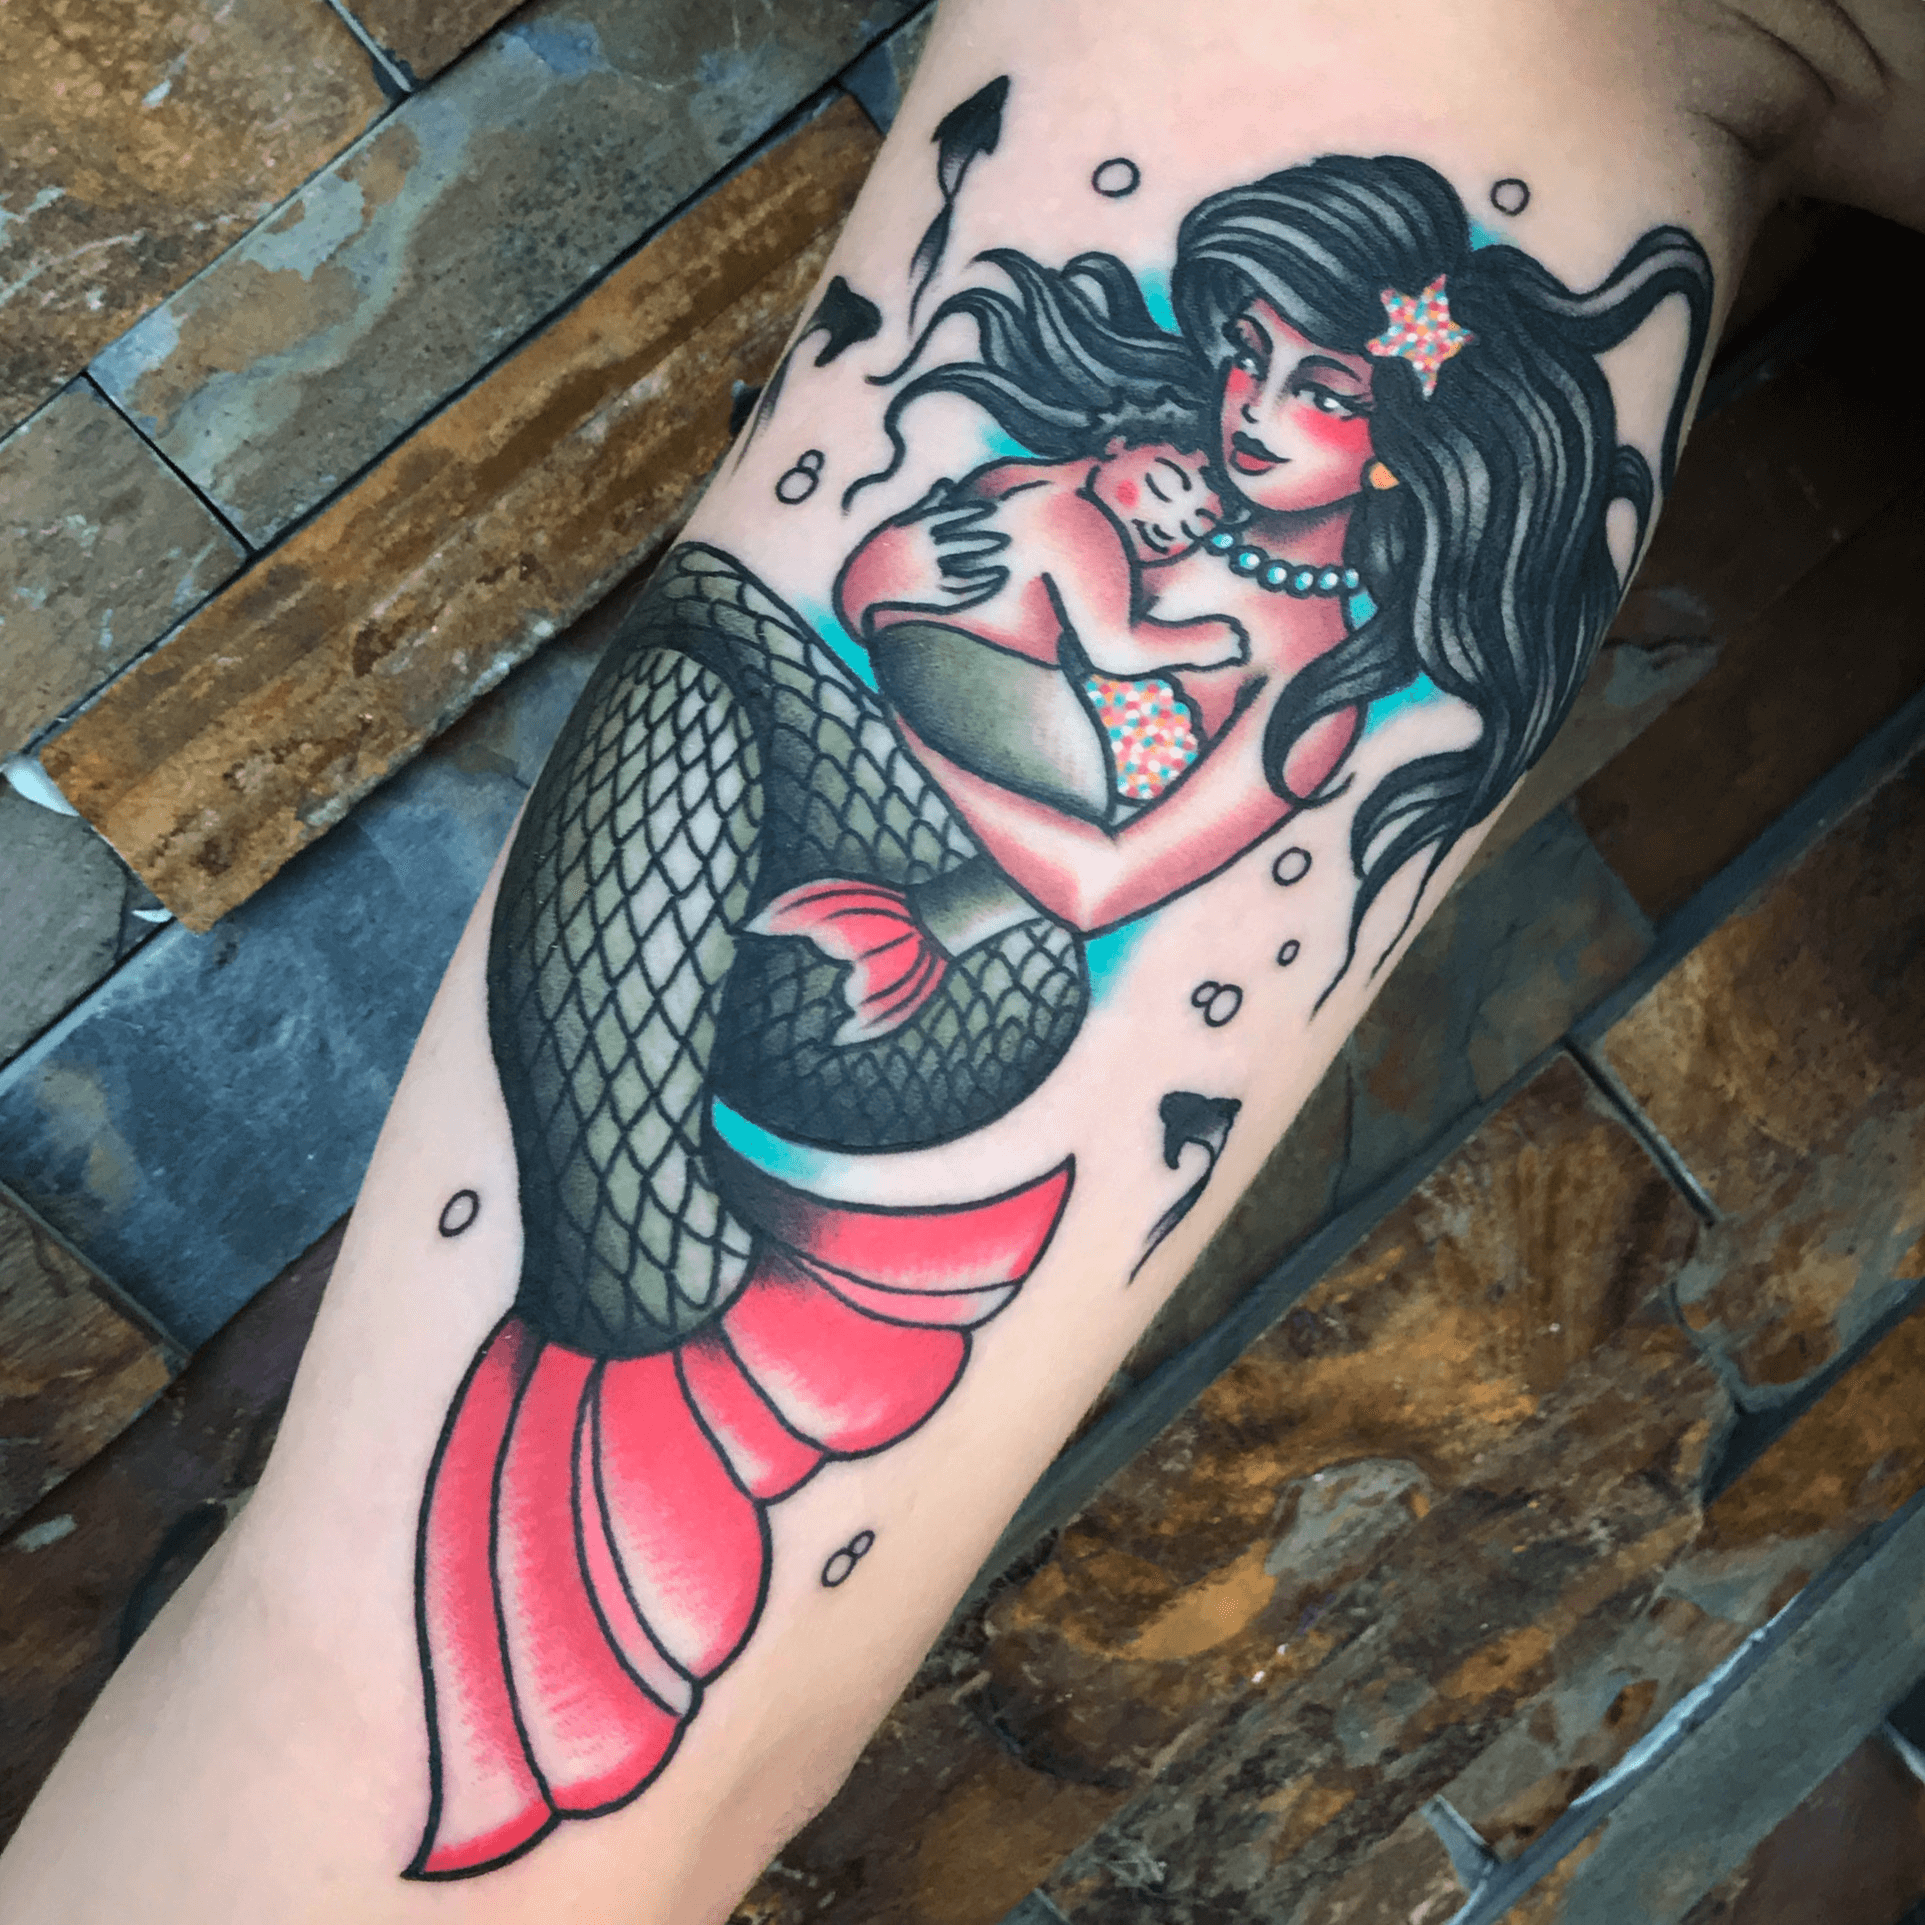 Buy Temporary Tattoo Mermaid Tattoos Ultra Thin Realistic Online in India   Etsy